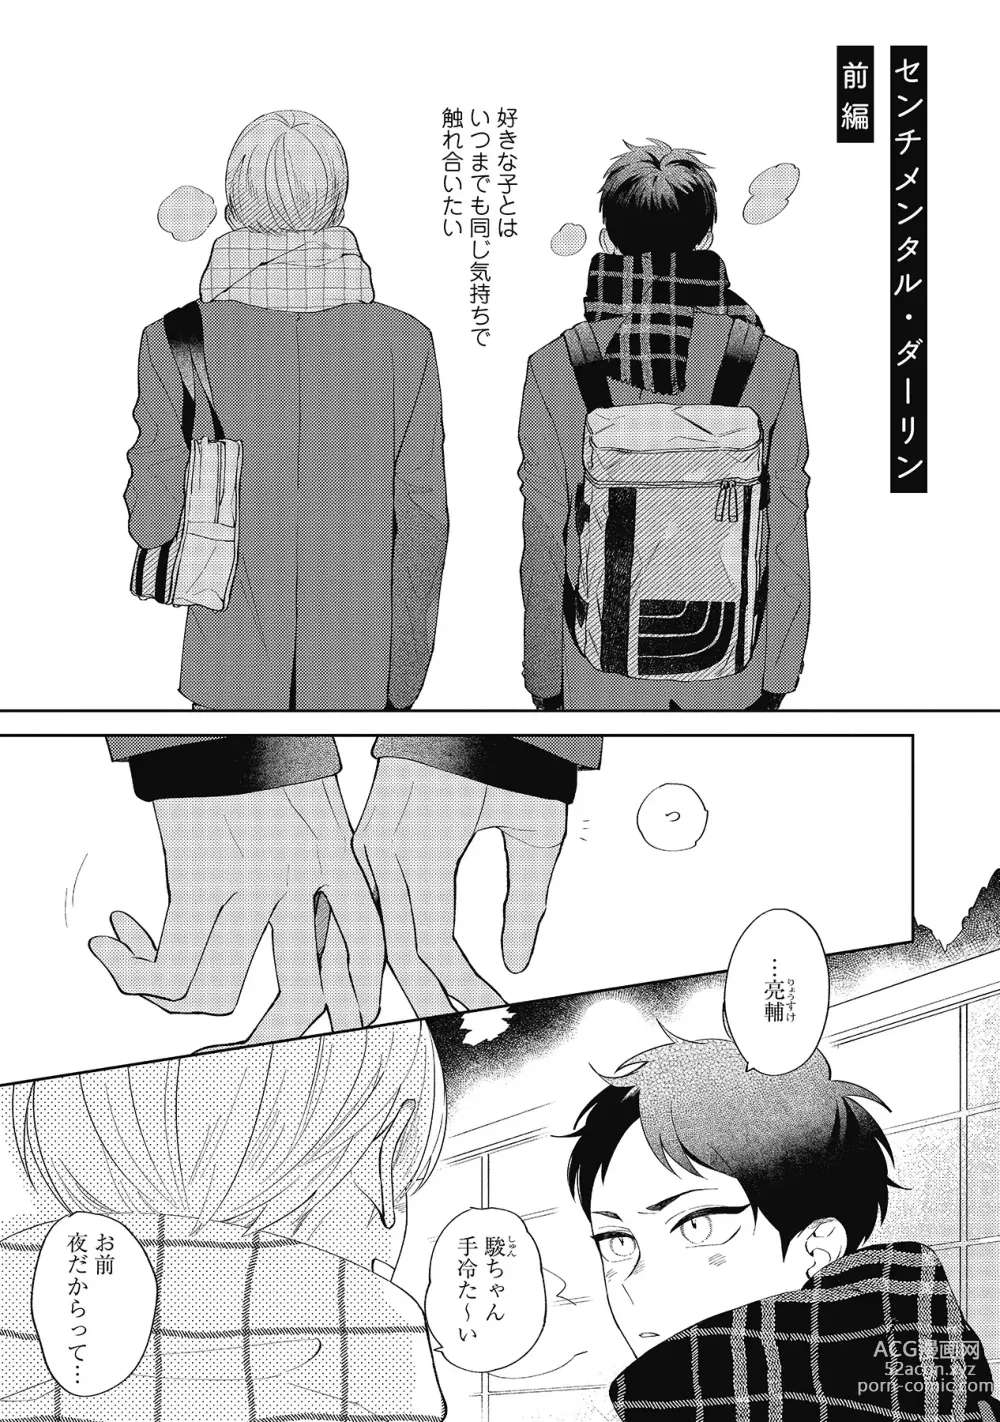 Page 5 of manga Sentimental Darling